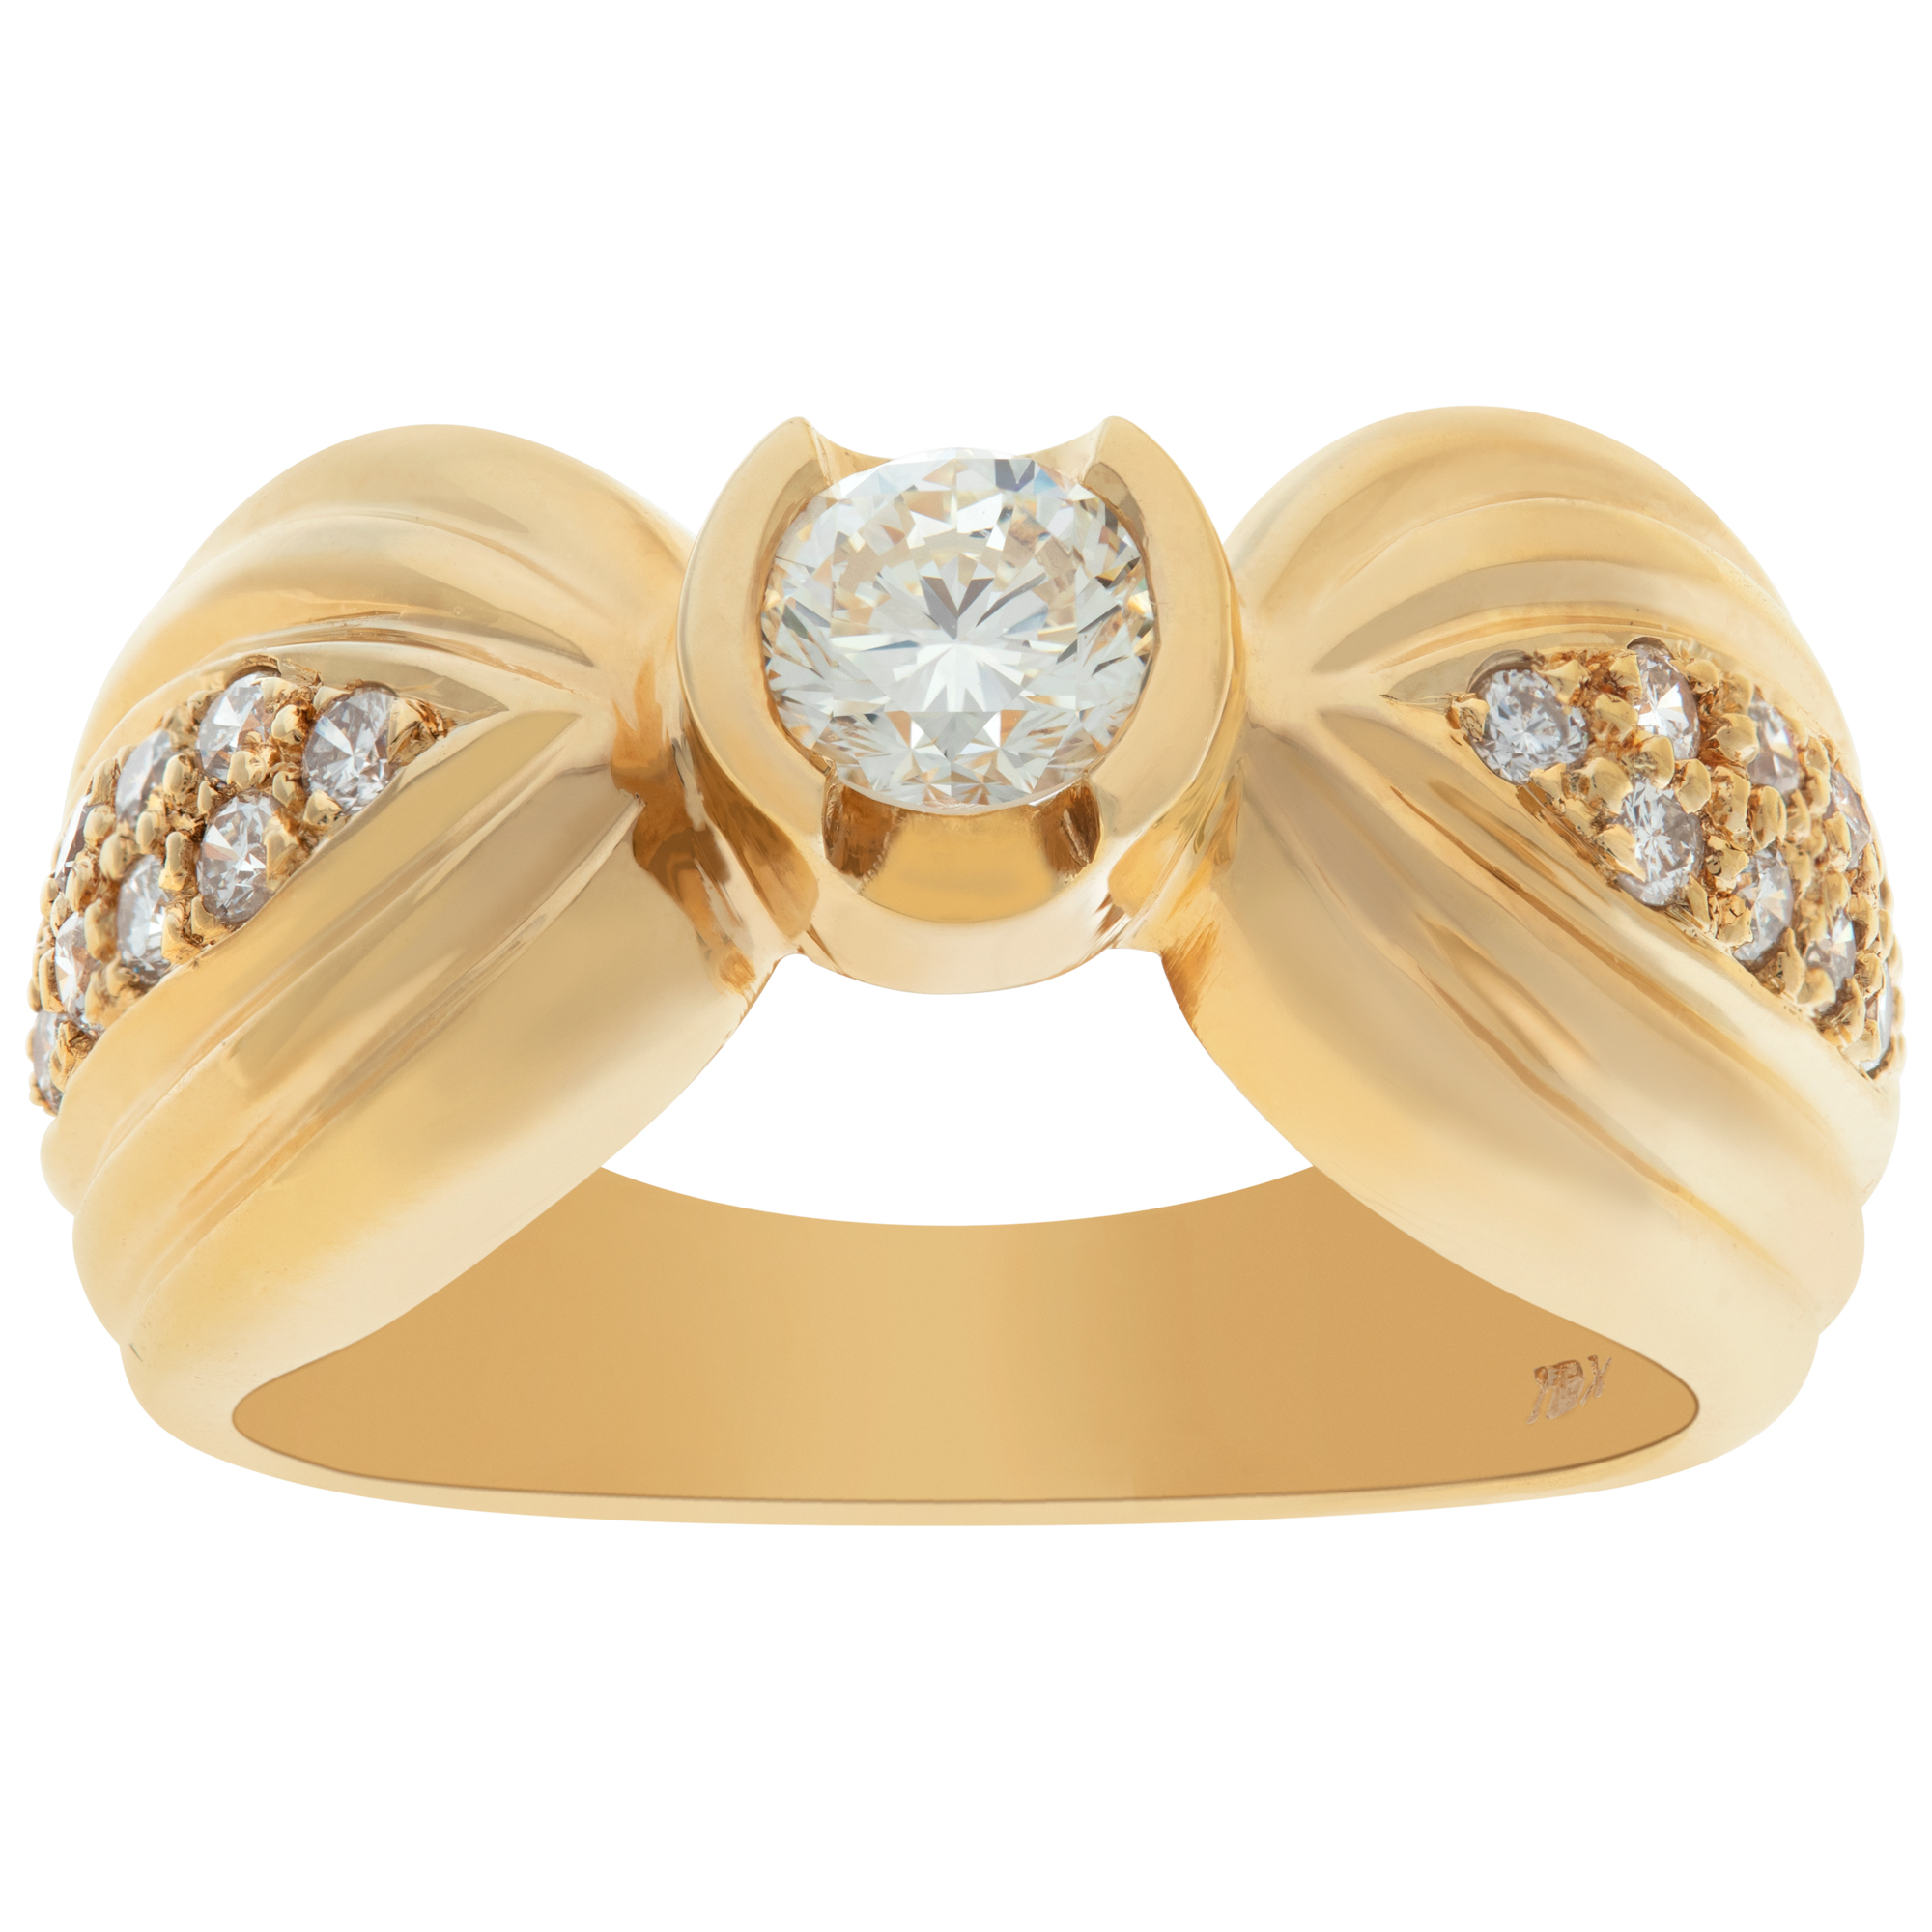 Diamond ring in 18k yellow gold with 0.4 carat center diamond image 1